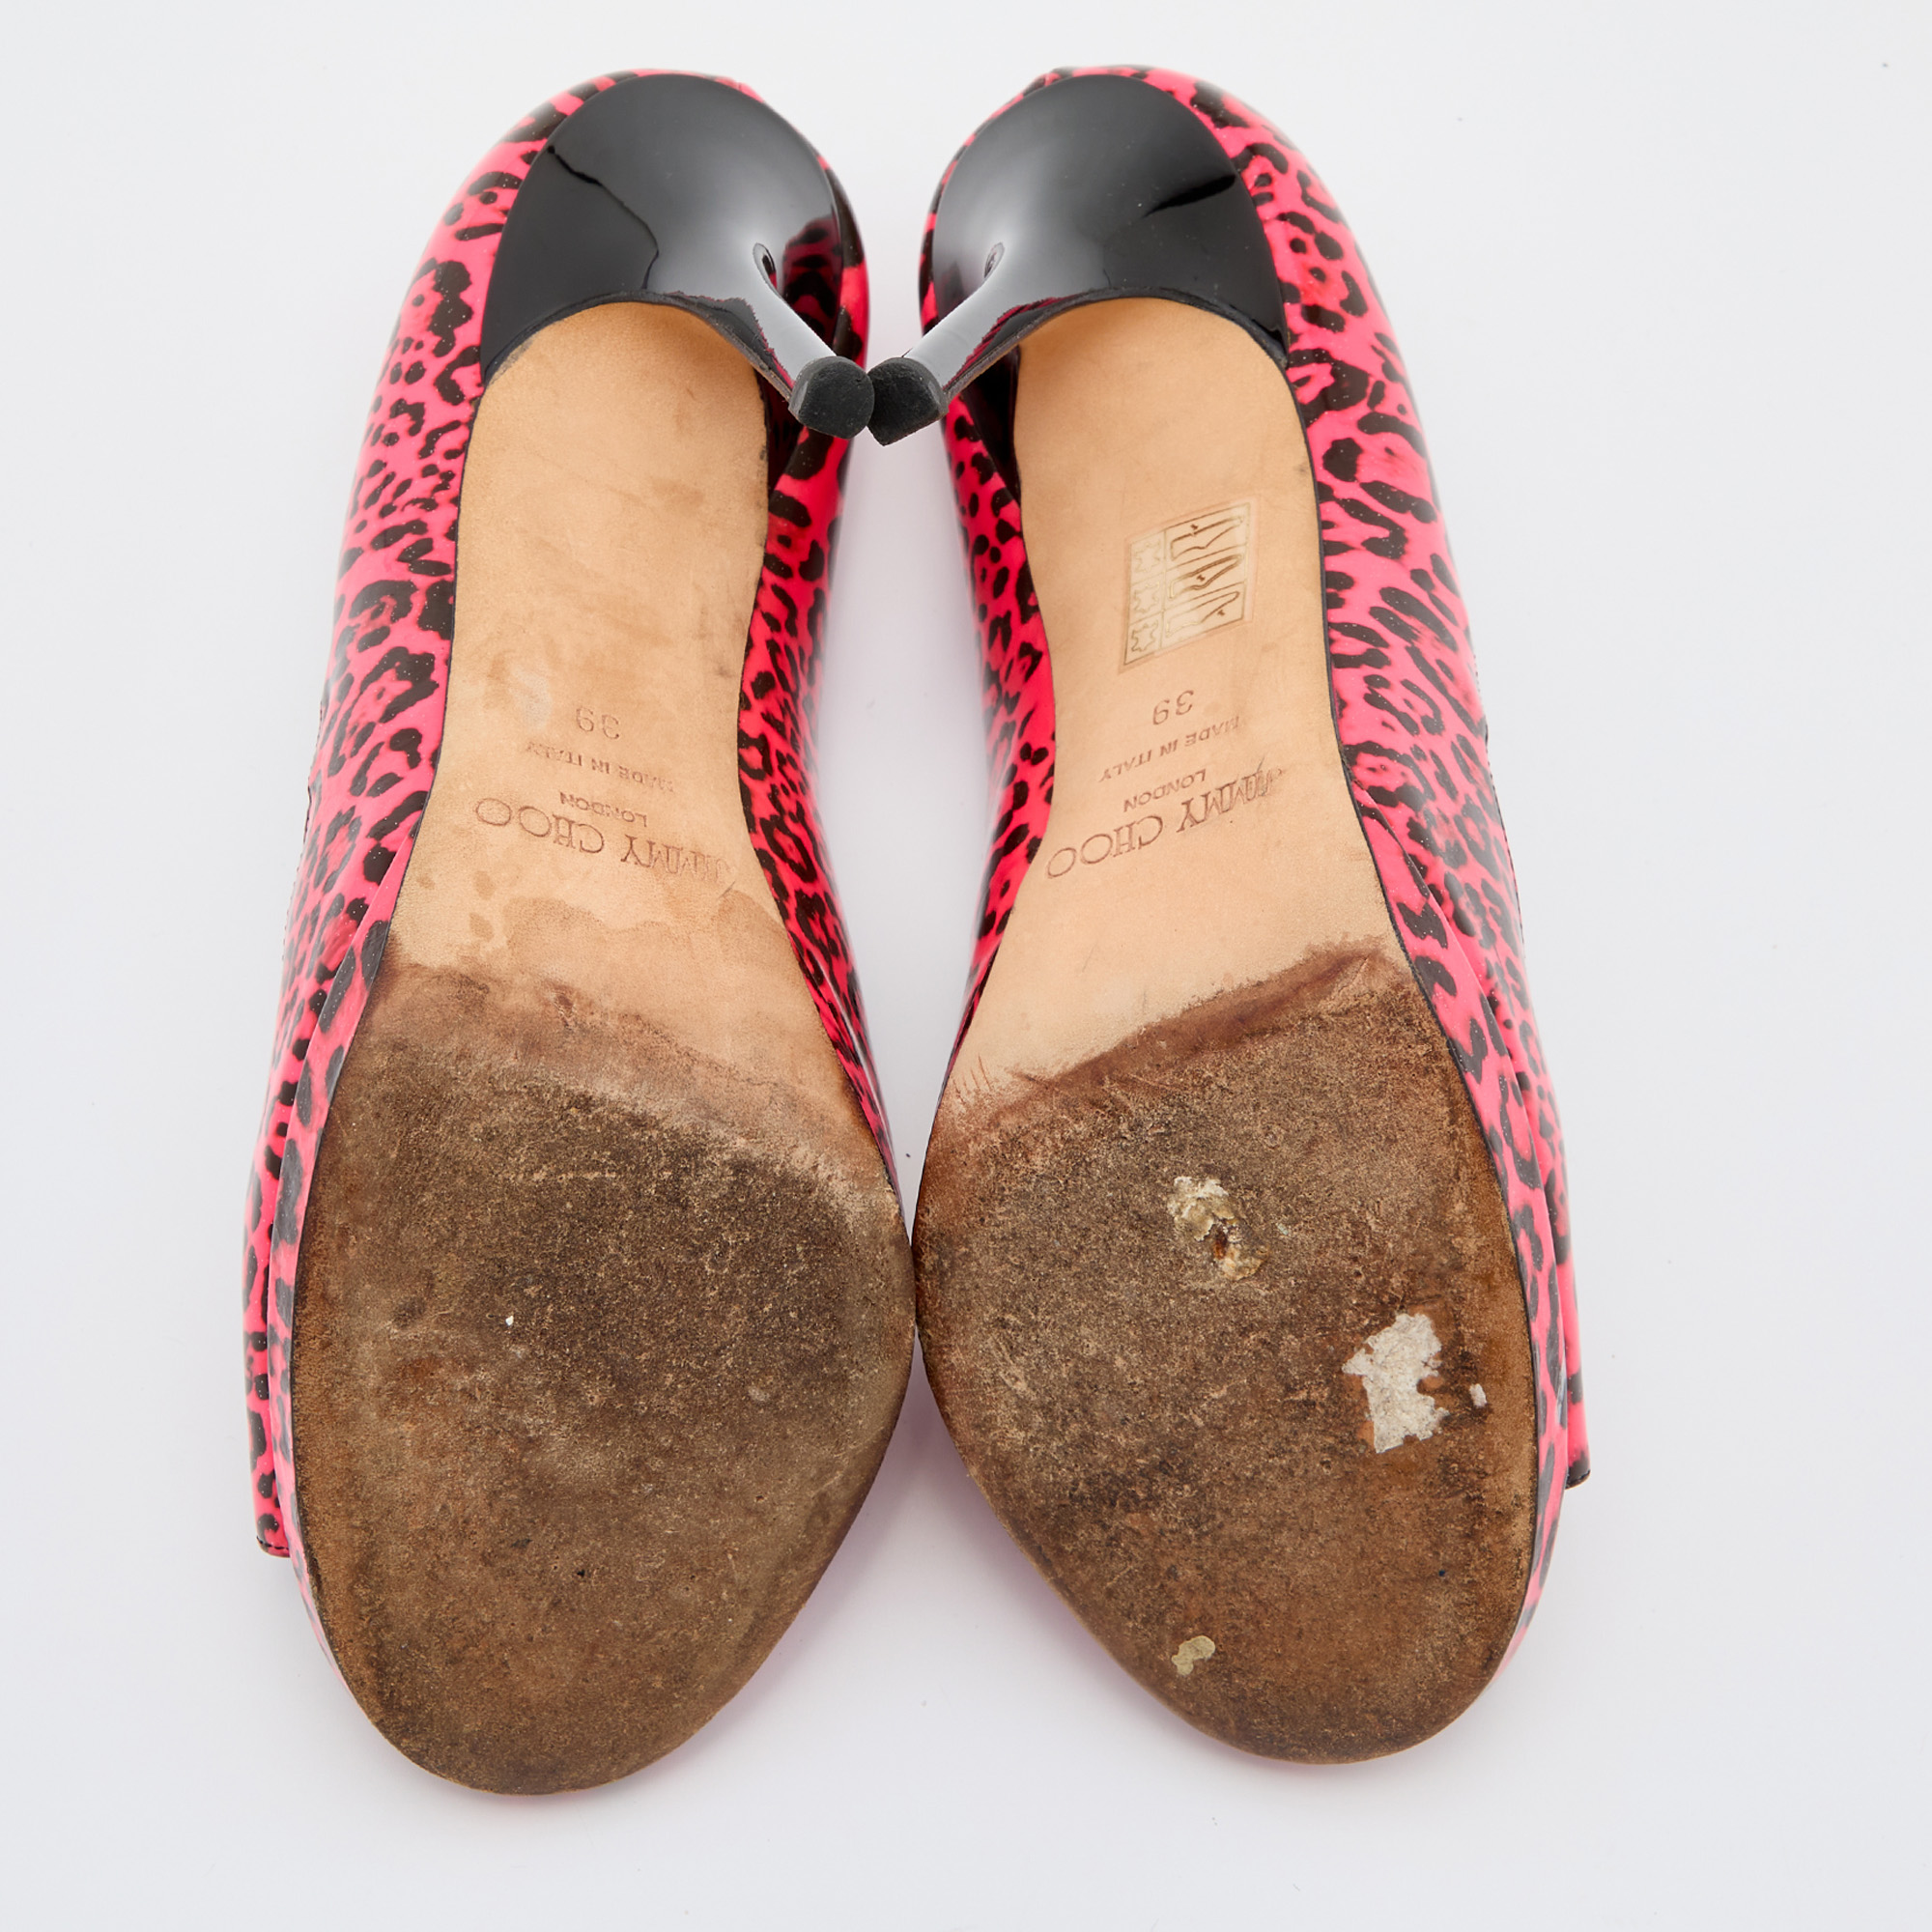 Jimmy Choo Pink Leopard Print Patent Leather Open Toe Pumps Size 39